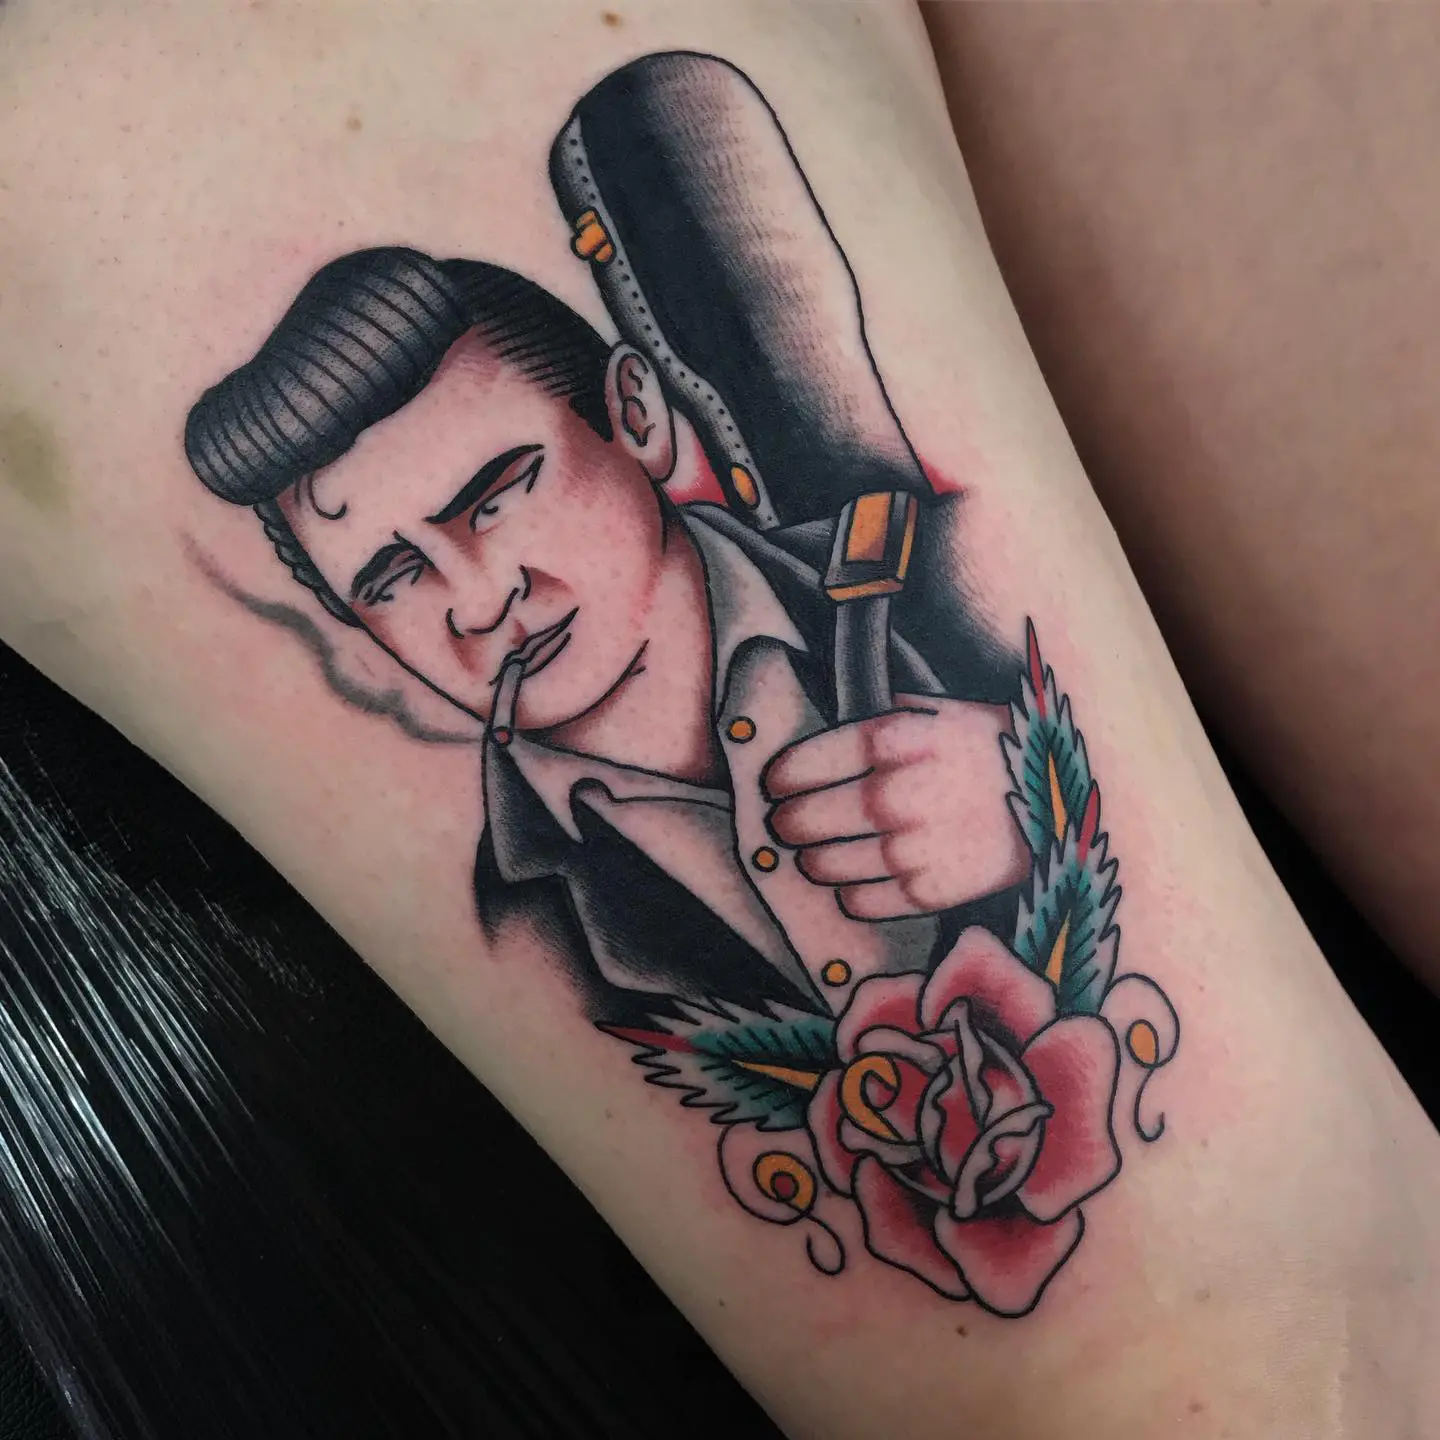 The Painted Man - “I hurt myself today” fun Johnny Cash... | Facebook